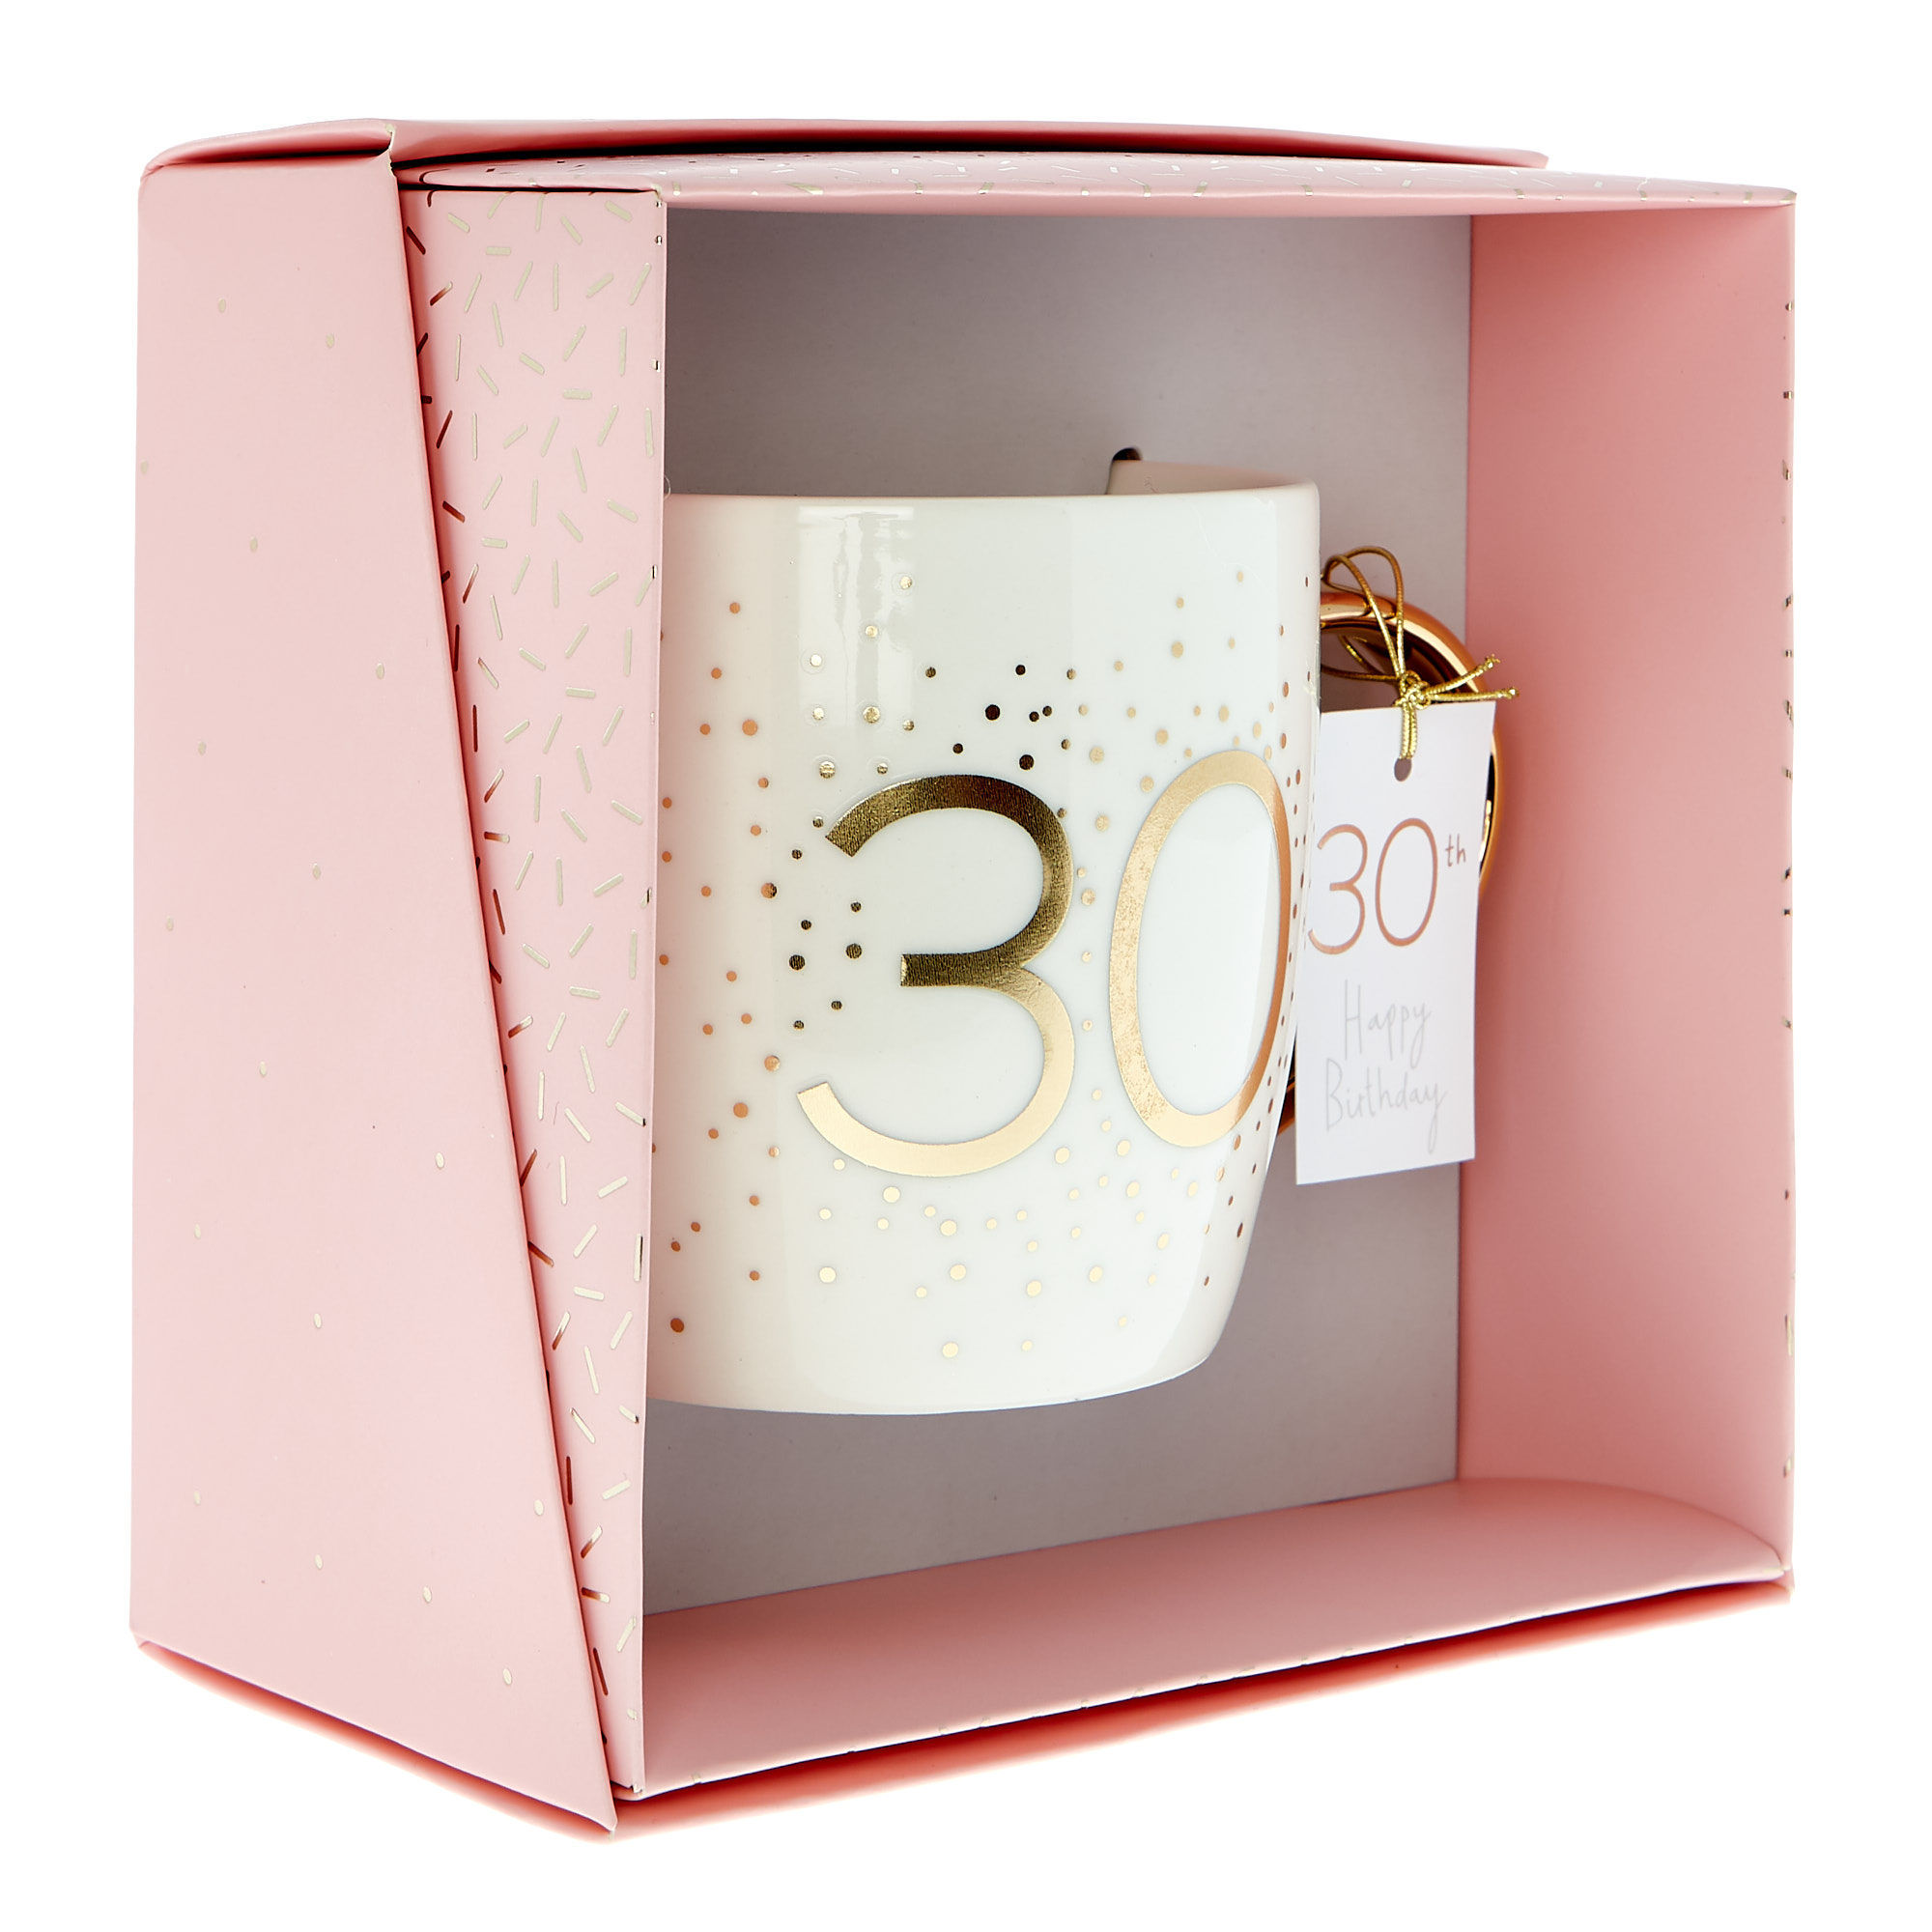 30th Birthday Mug In A Box - Happy Birthday To You